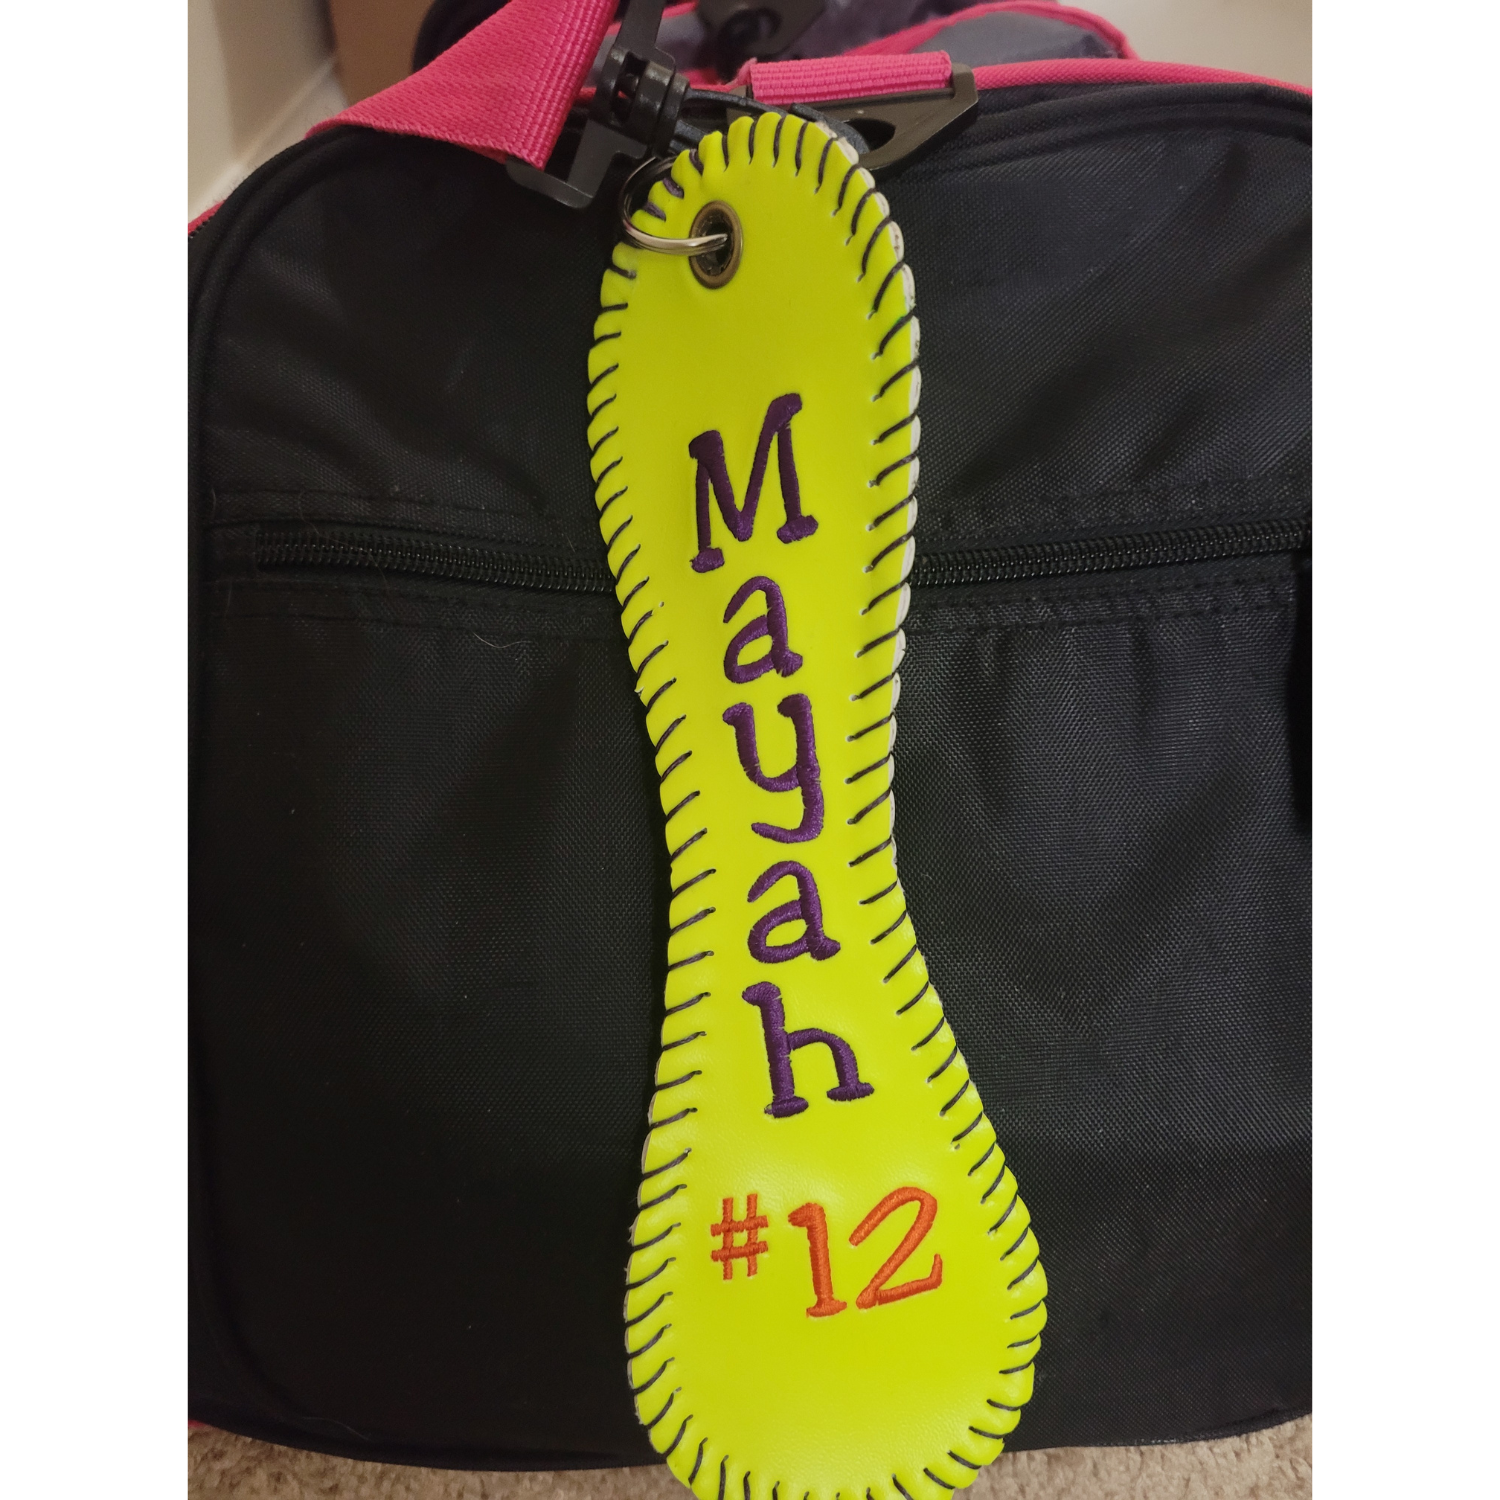 Personalized Softball Bag Tag